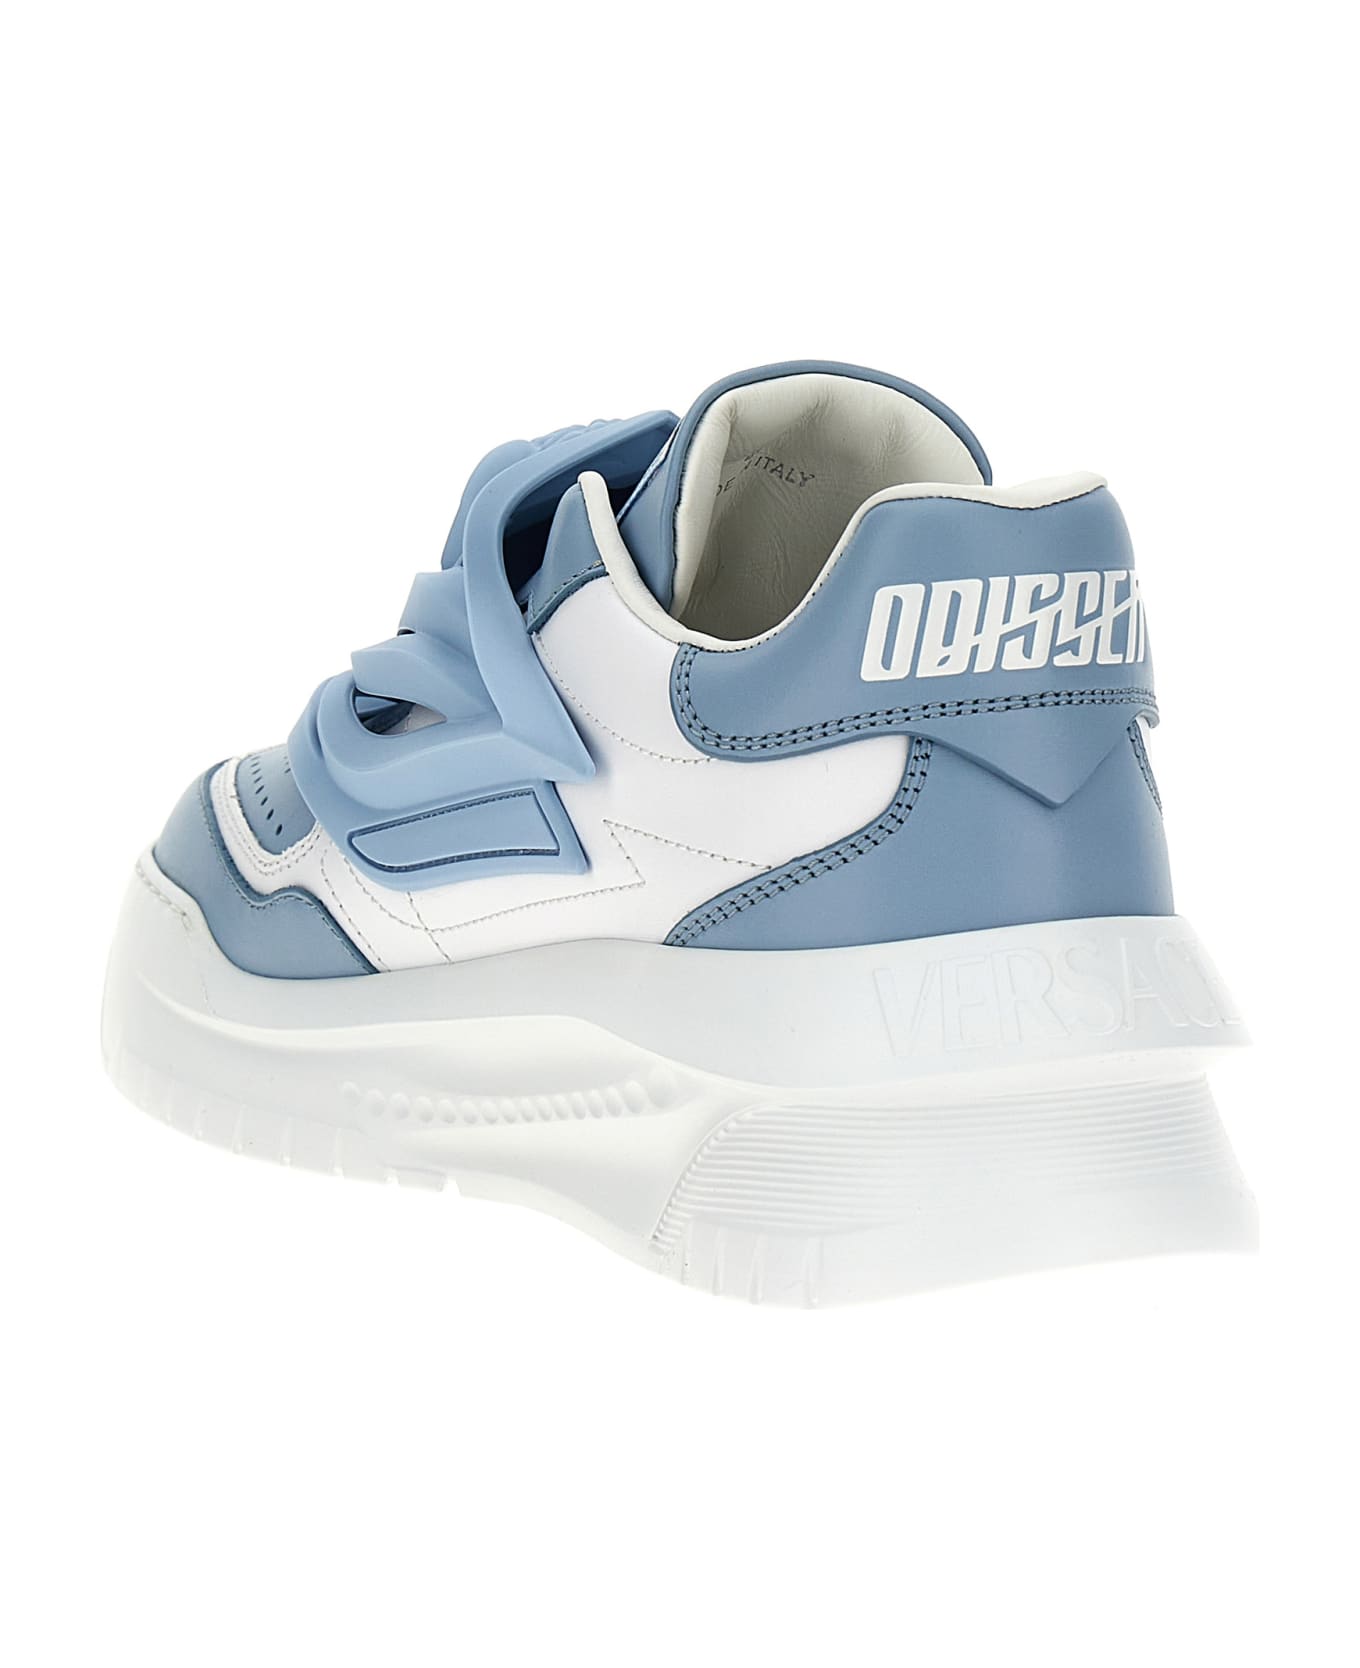 Versace 'odissea' Sneakers - Light Blue スニーカー